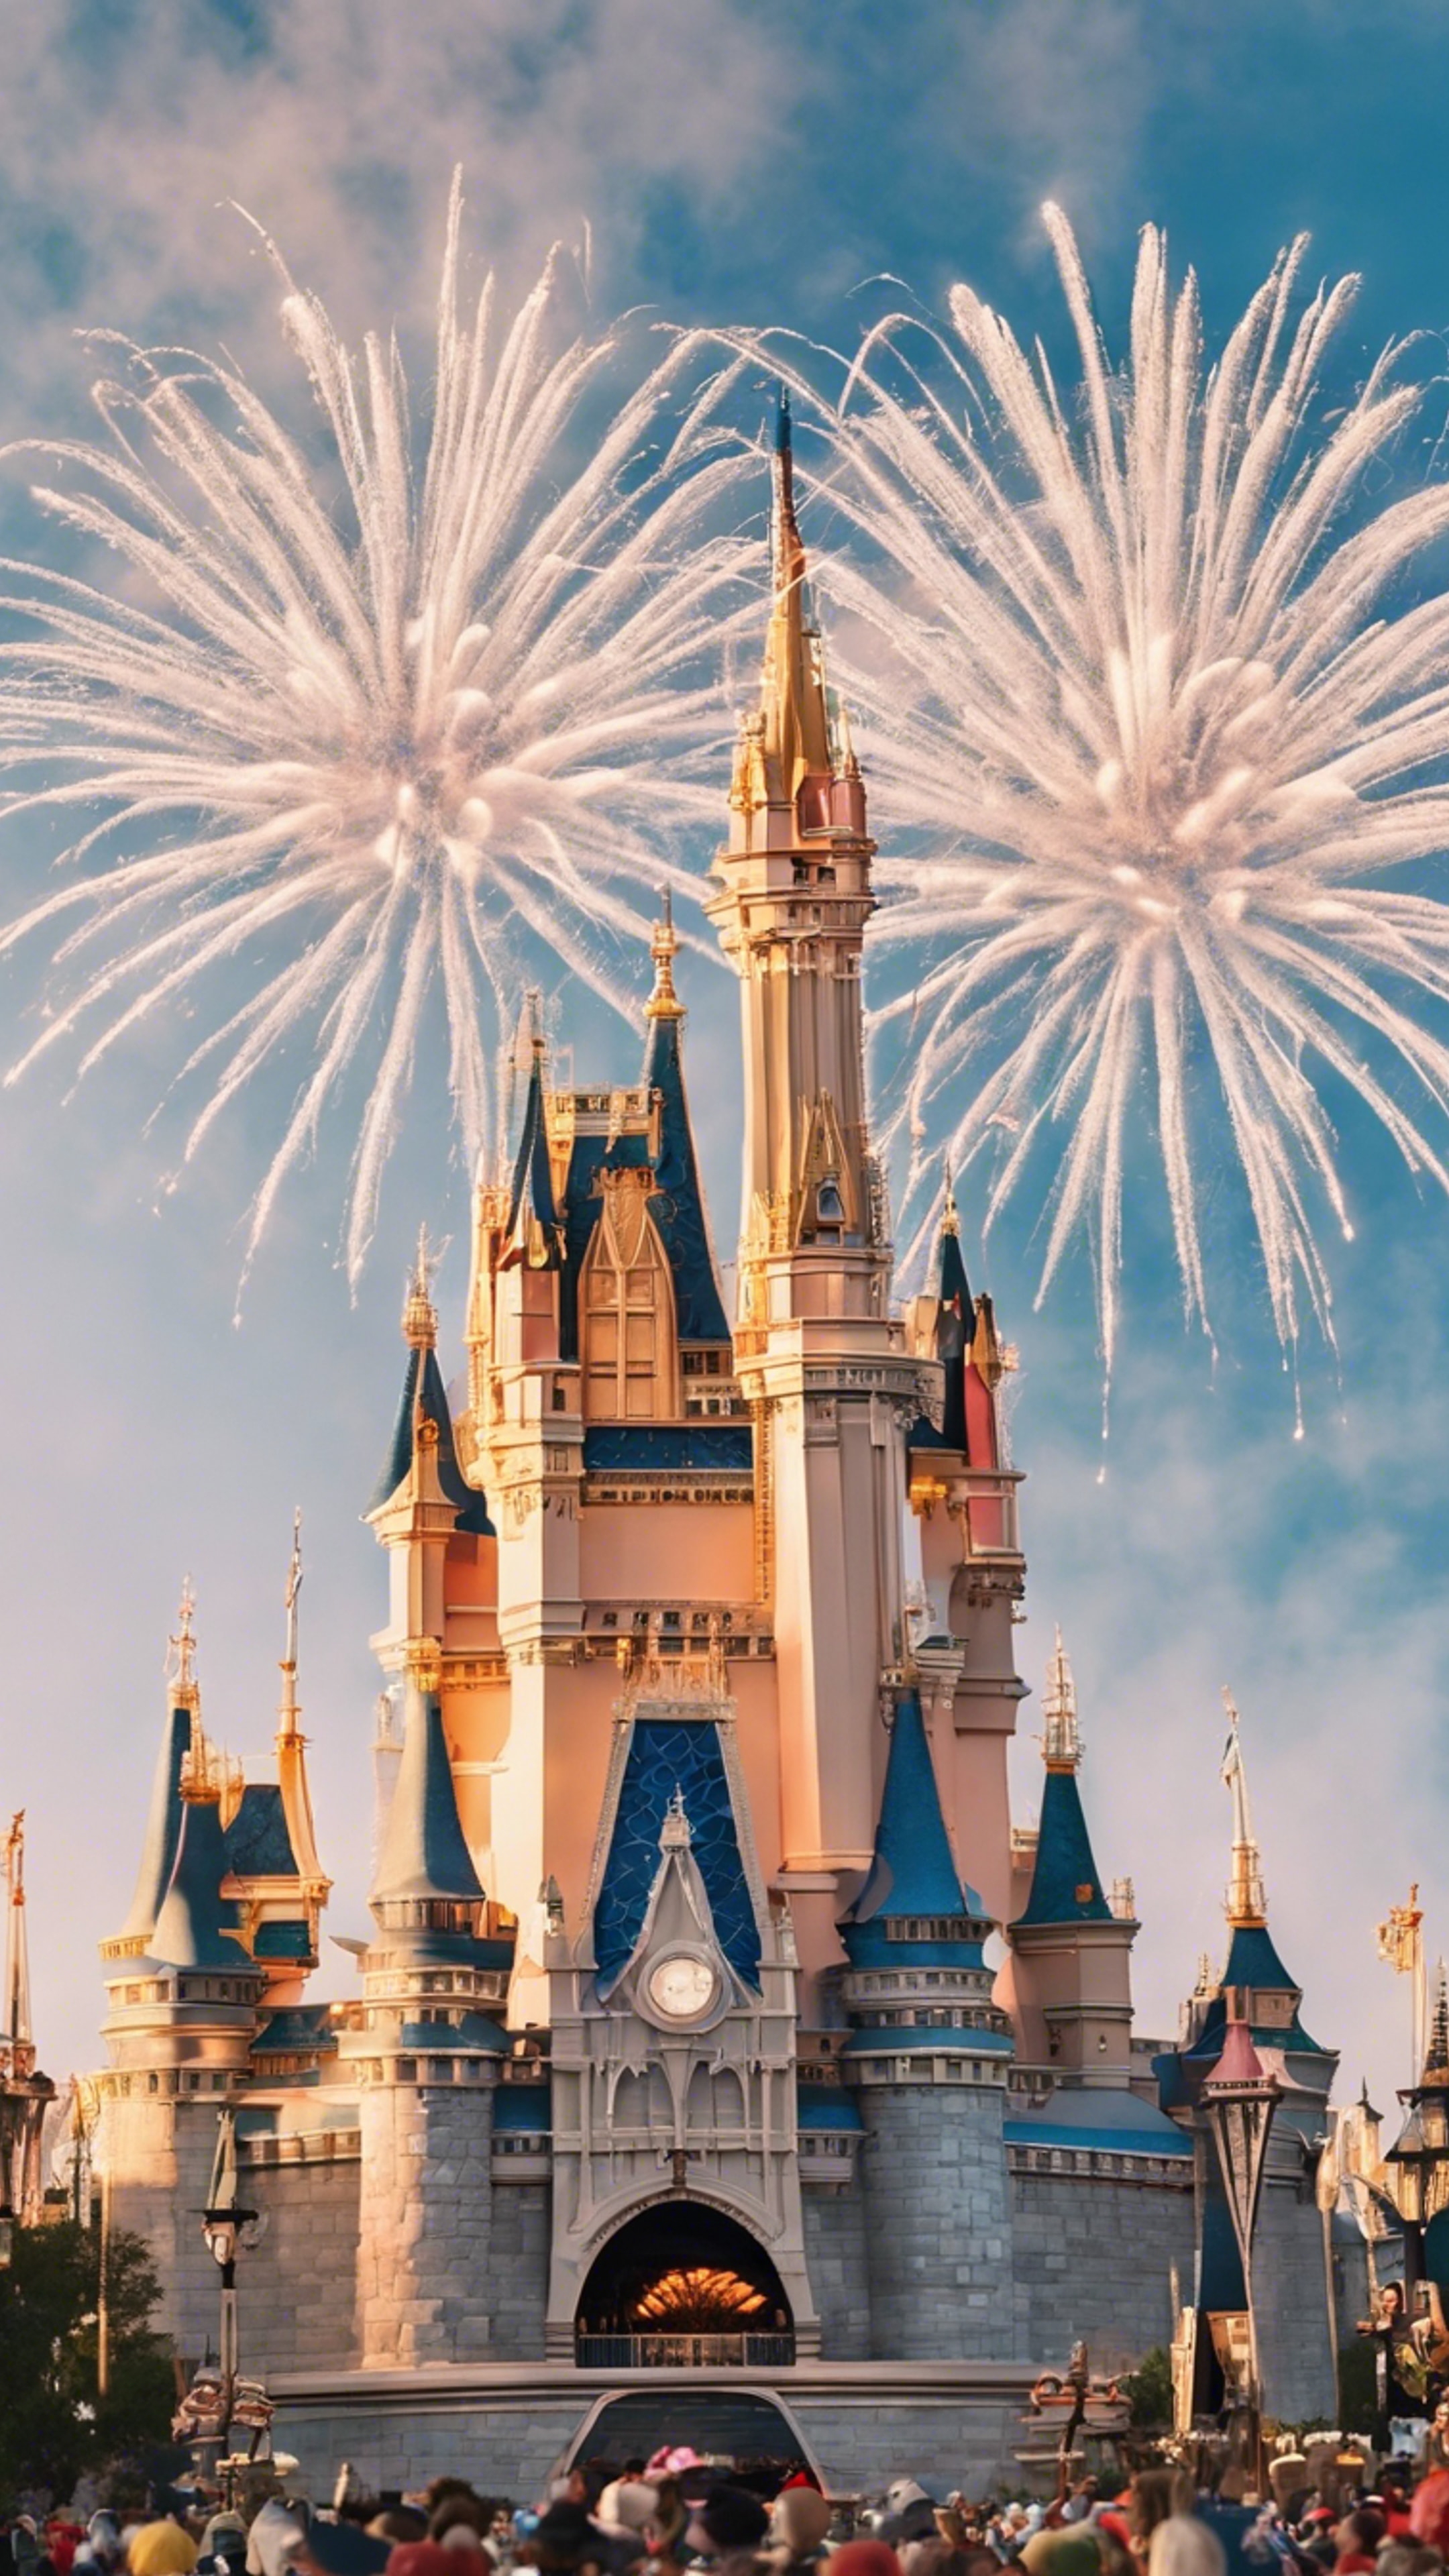 A dazzling firework display over Disney's Magic Kingdom, as seen from the Main Street U.S.A. ផ្ទាំង​រូបភាព[06ea505dccb744c89f0a]